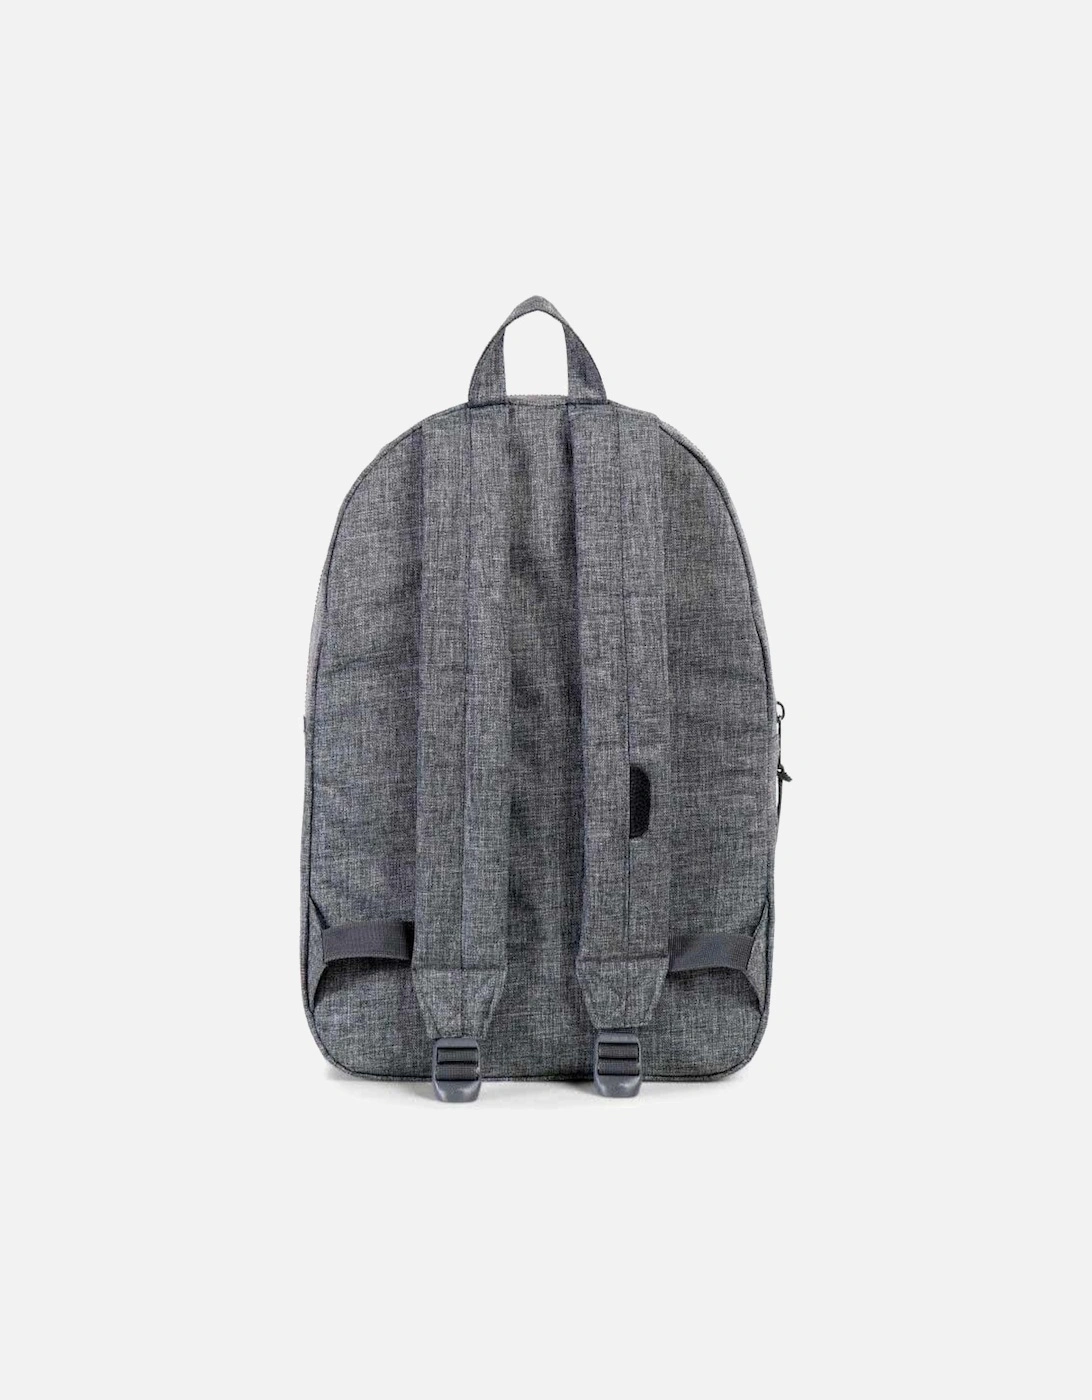 Supply Co - Settlement Backpack - Raven Crosshatch Grey